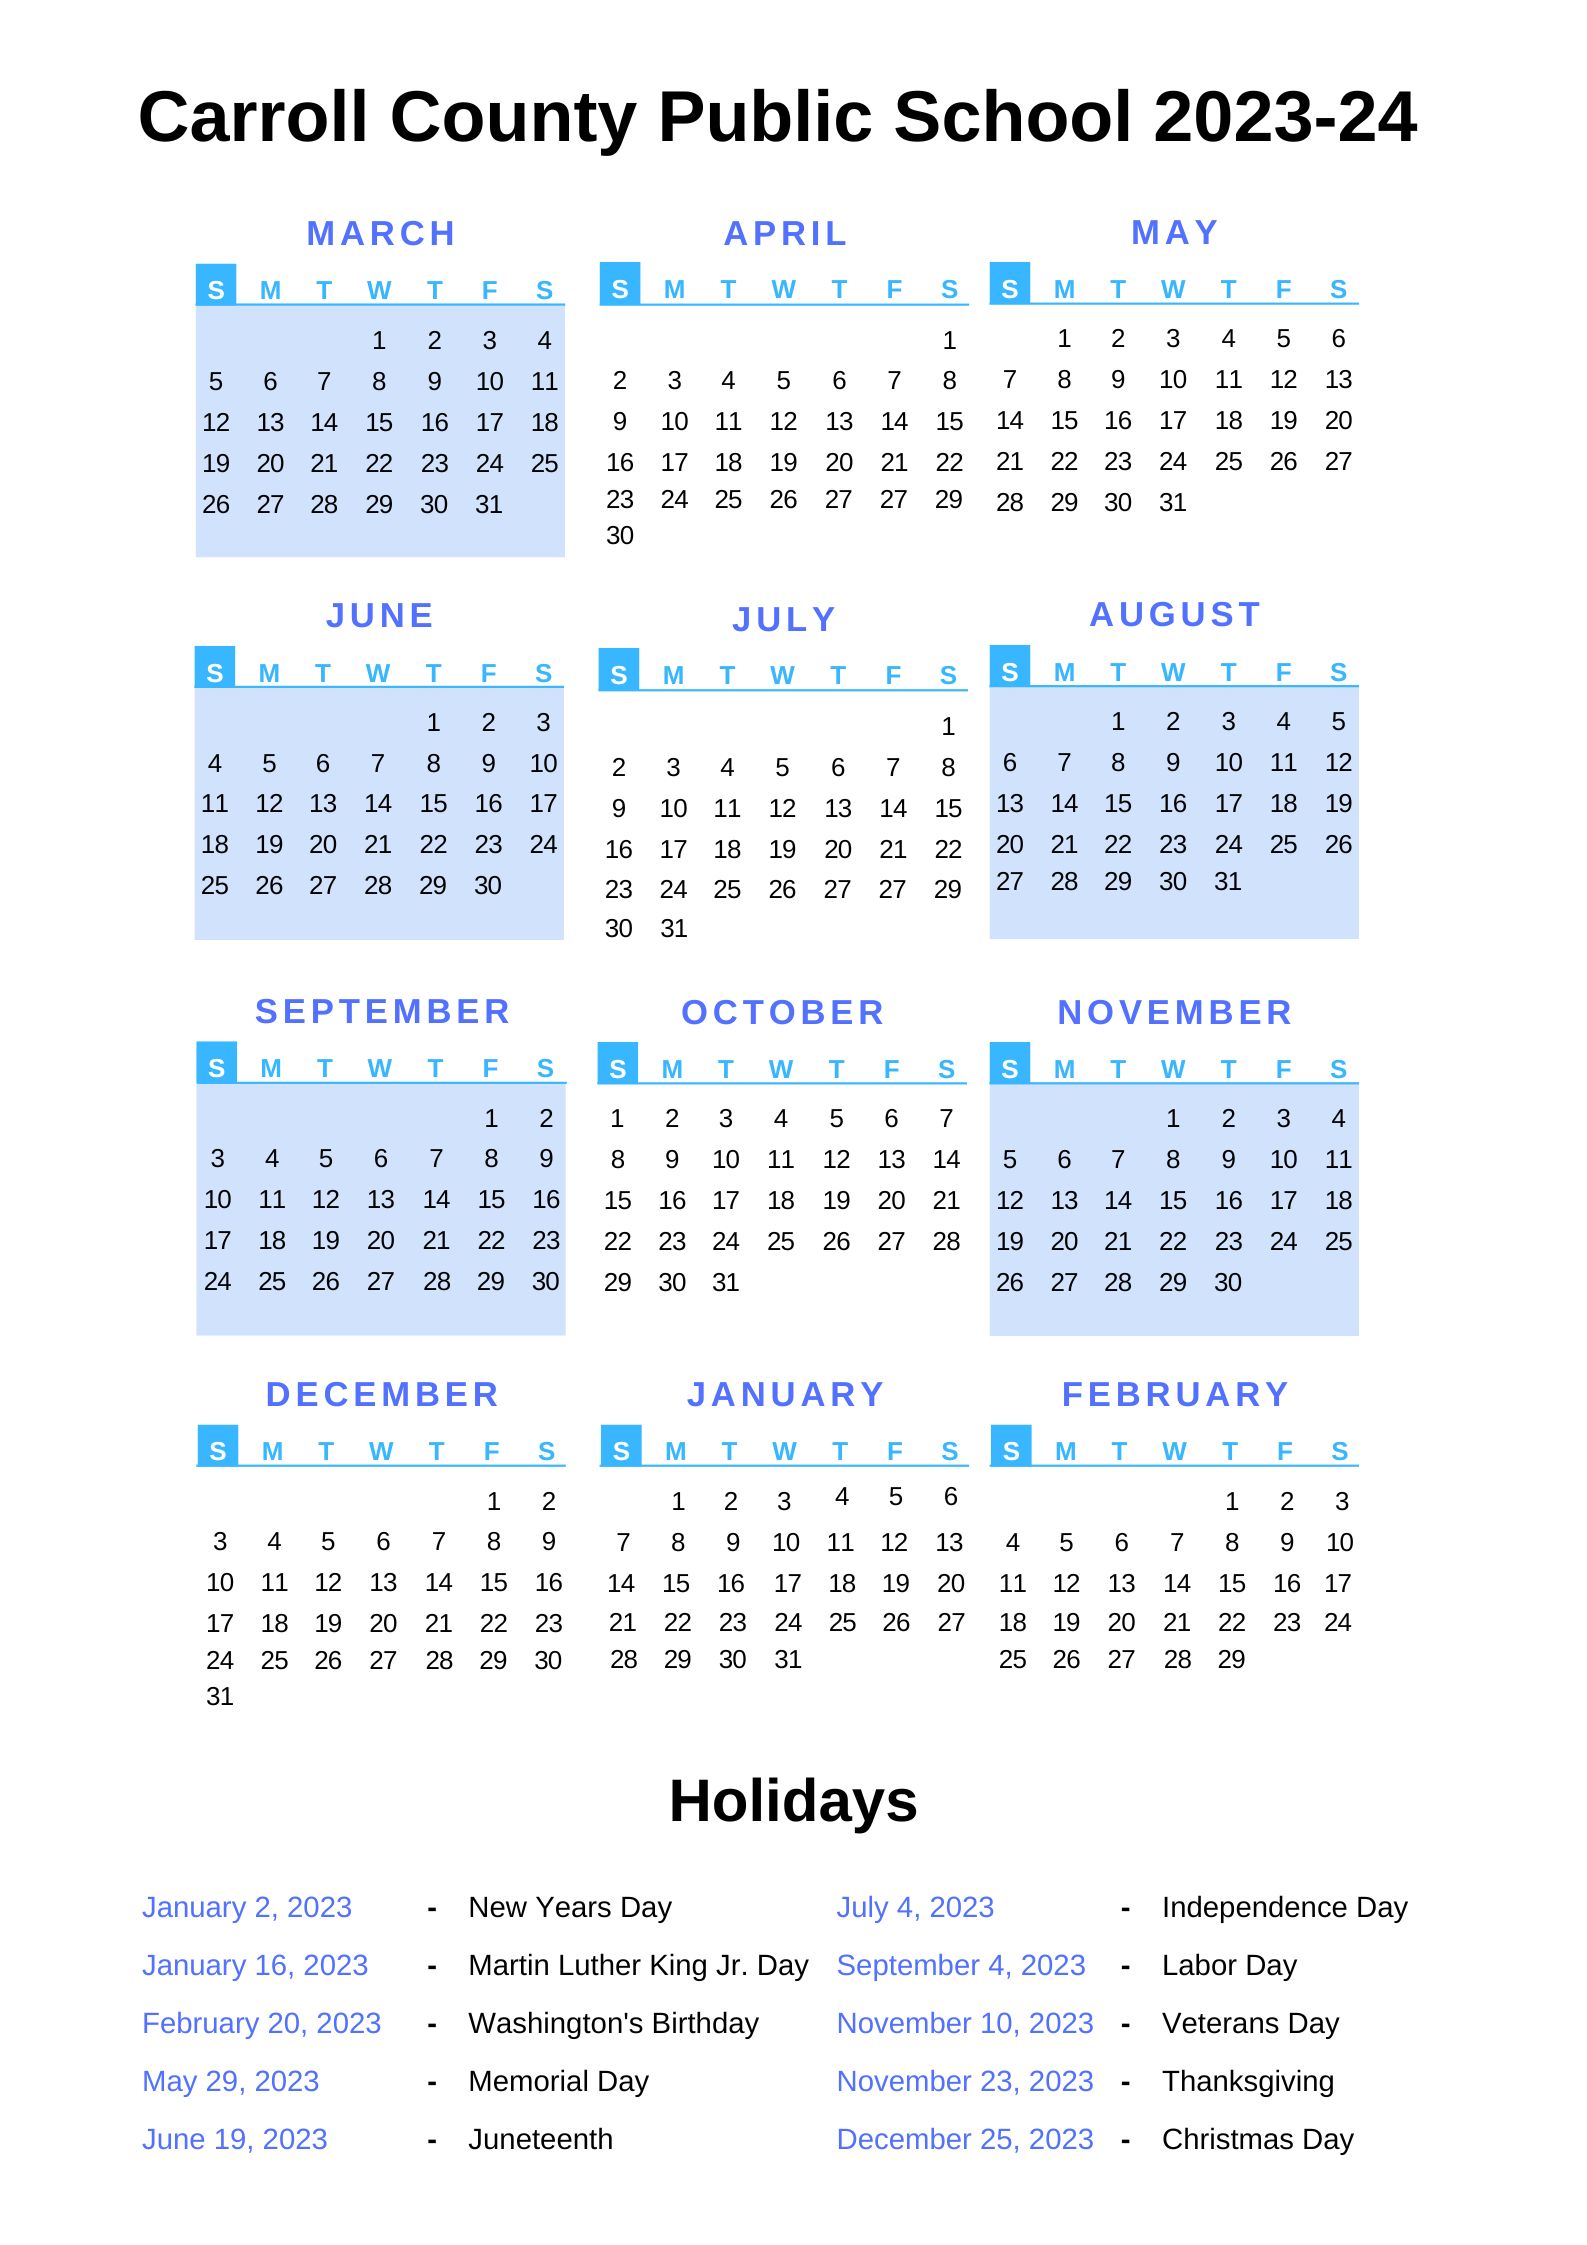 Carroll County Public Schools Calendar 202324 With Holidays